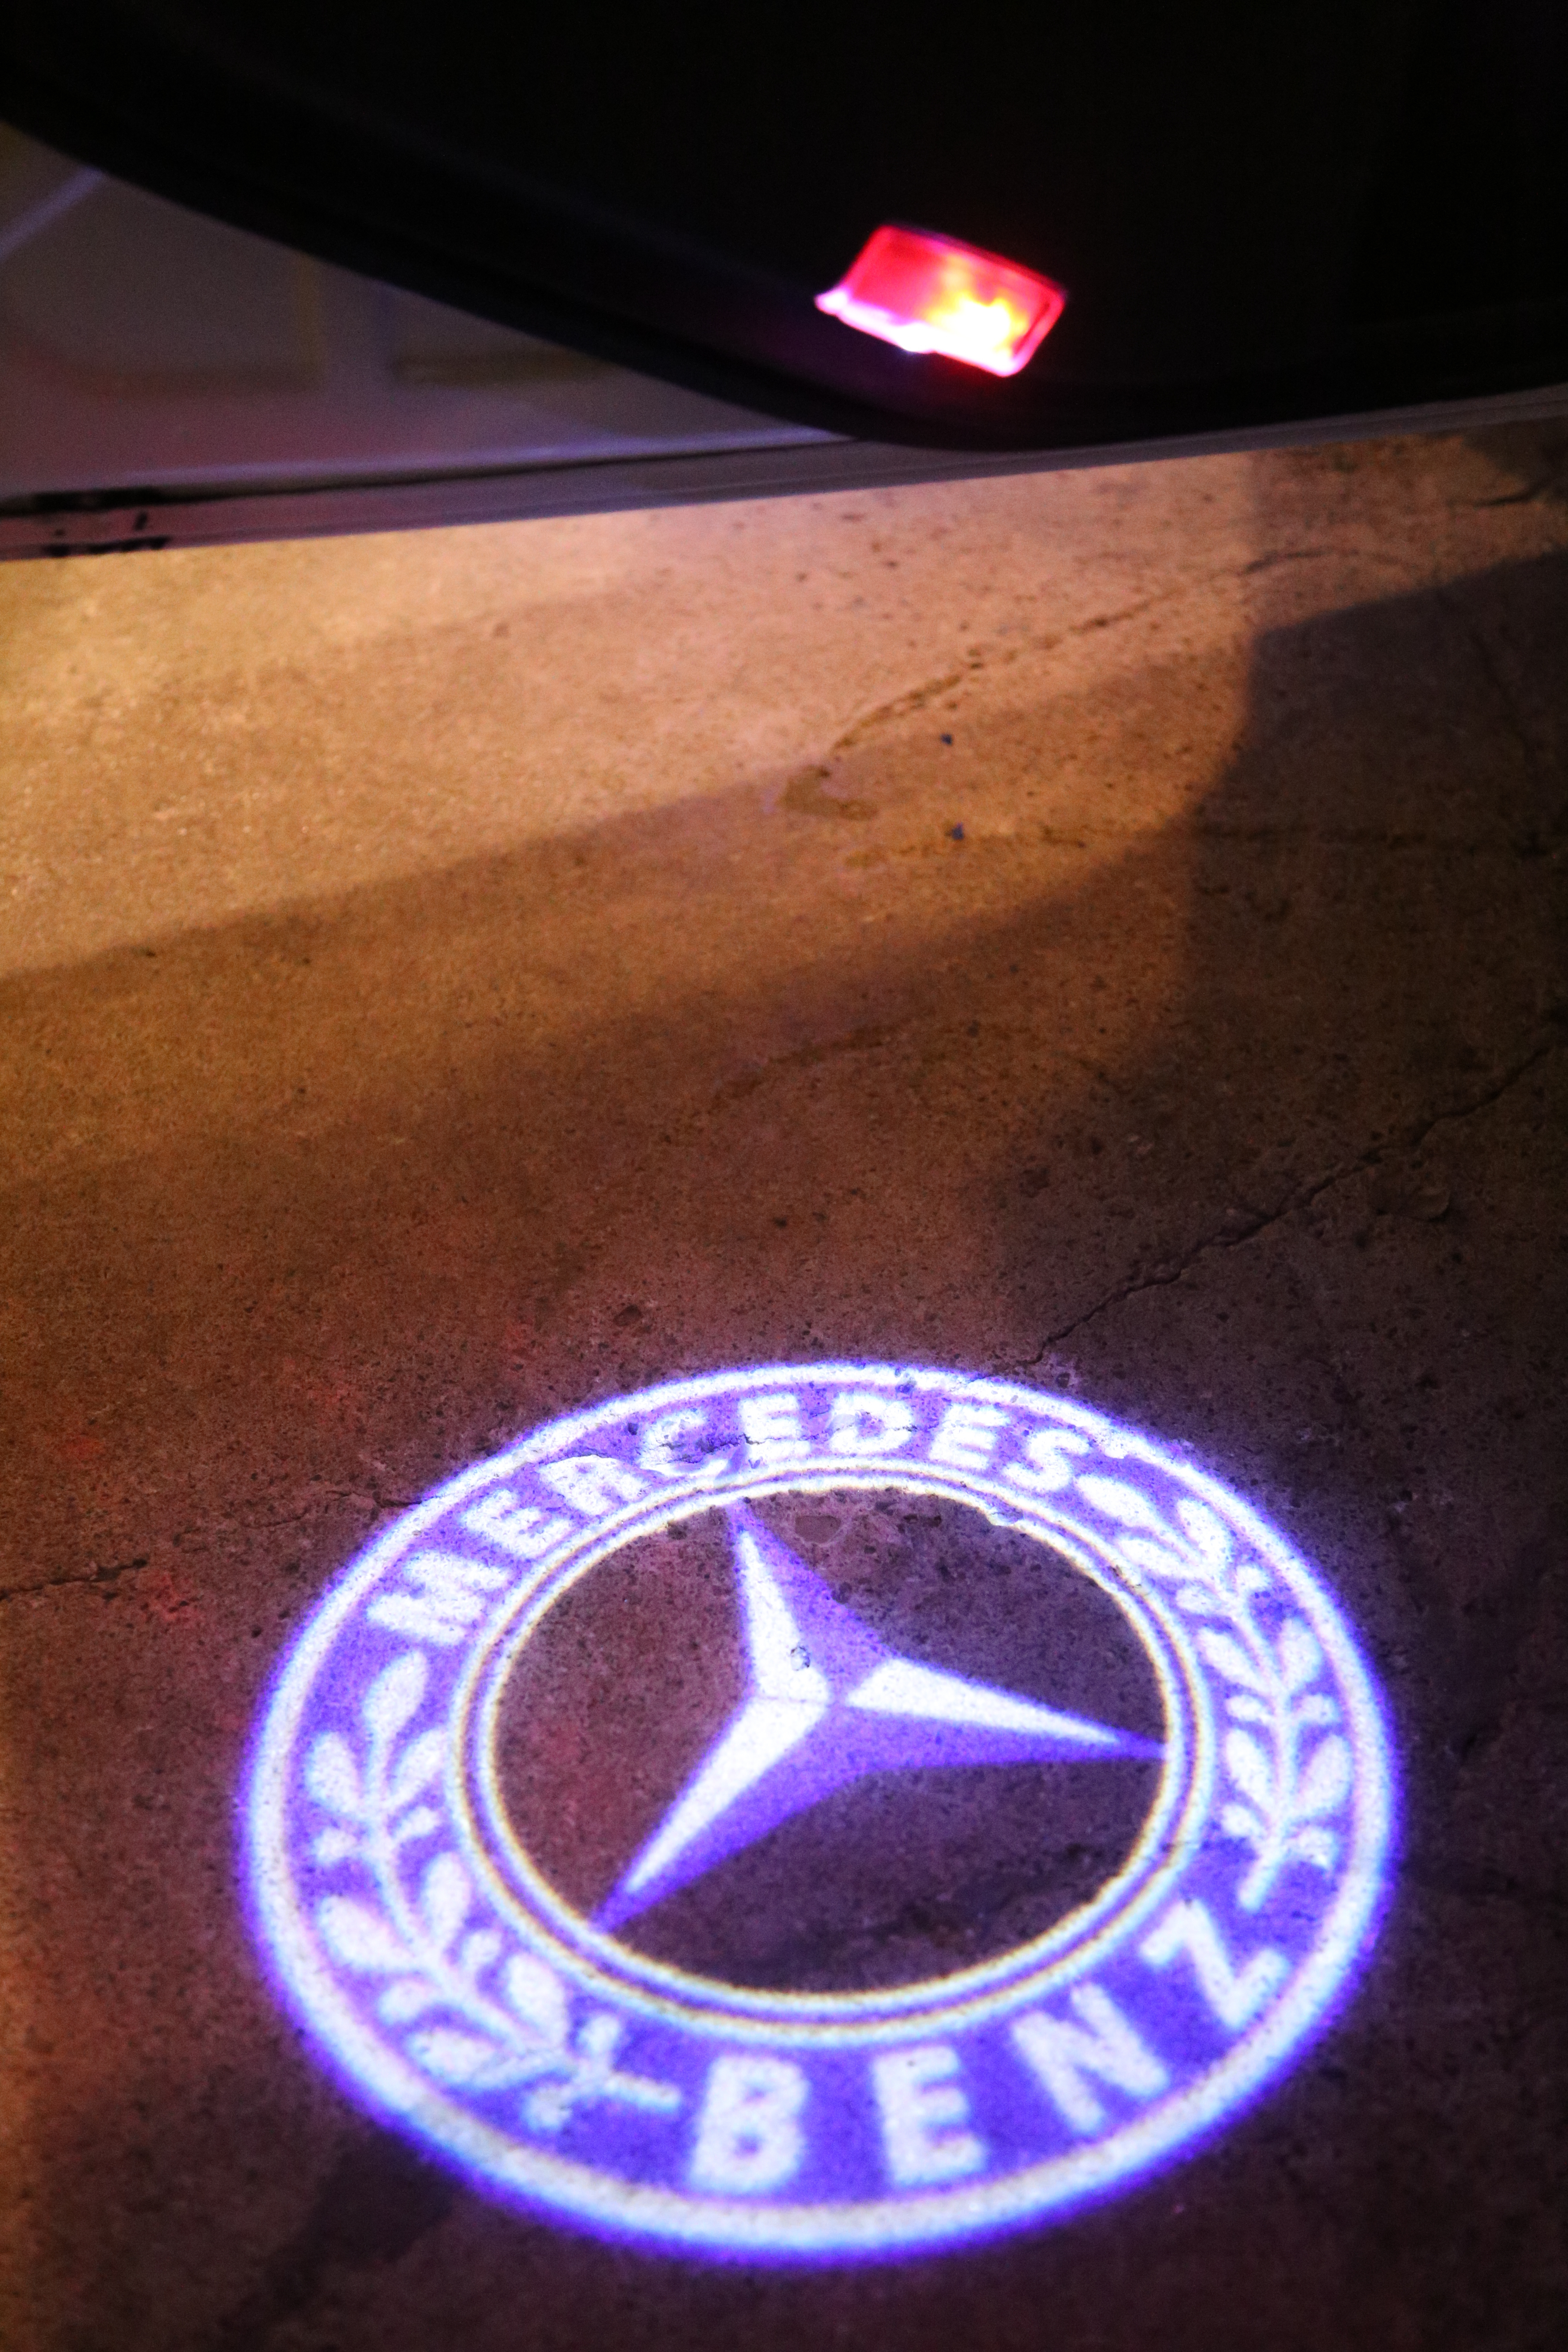 Full-color laurel wreath and Mercedes-Benz star logo